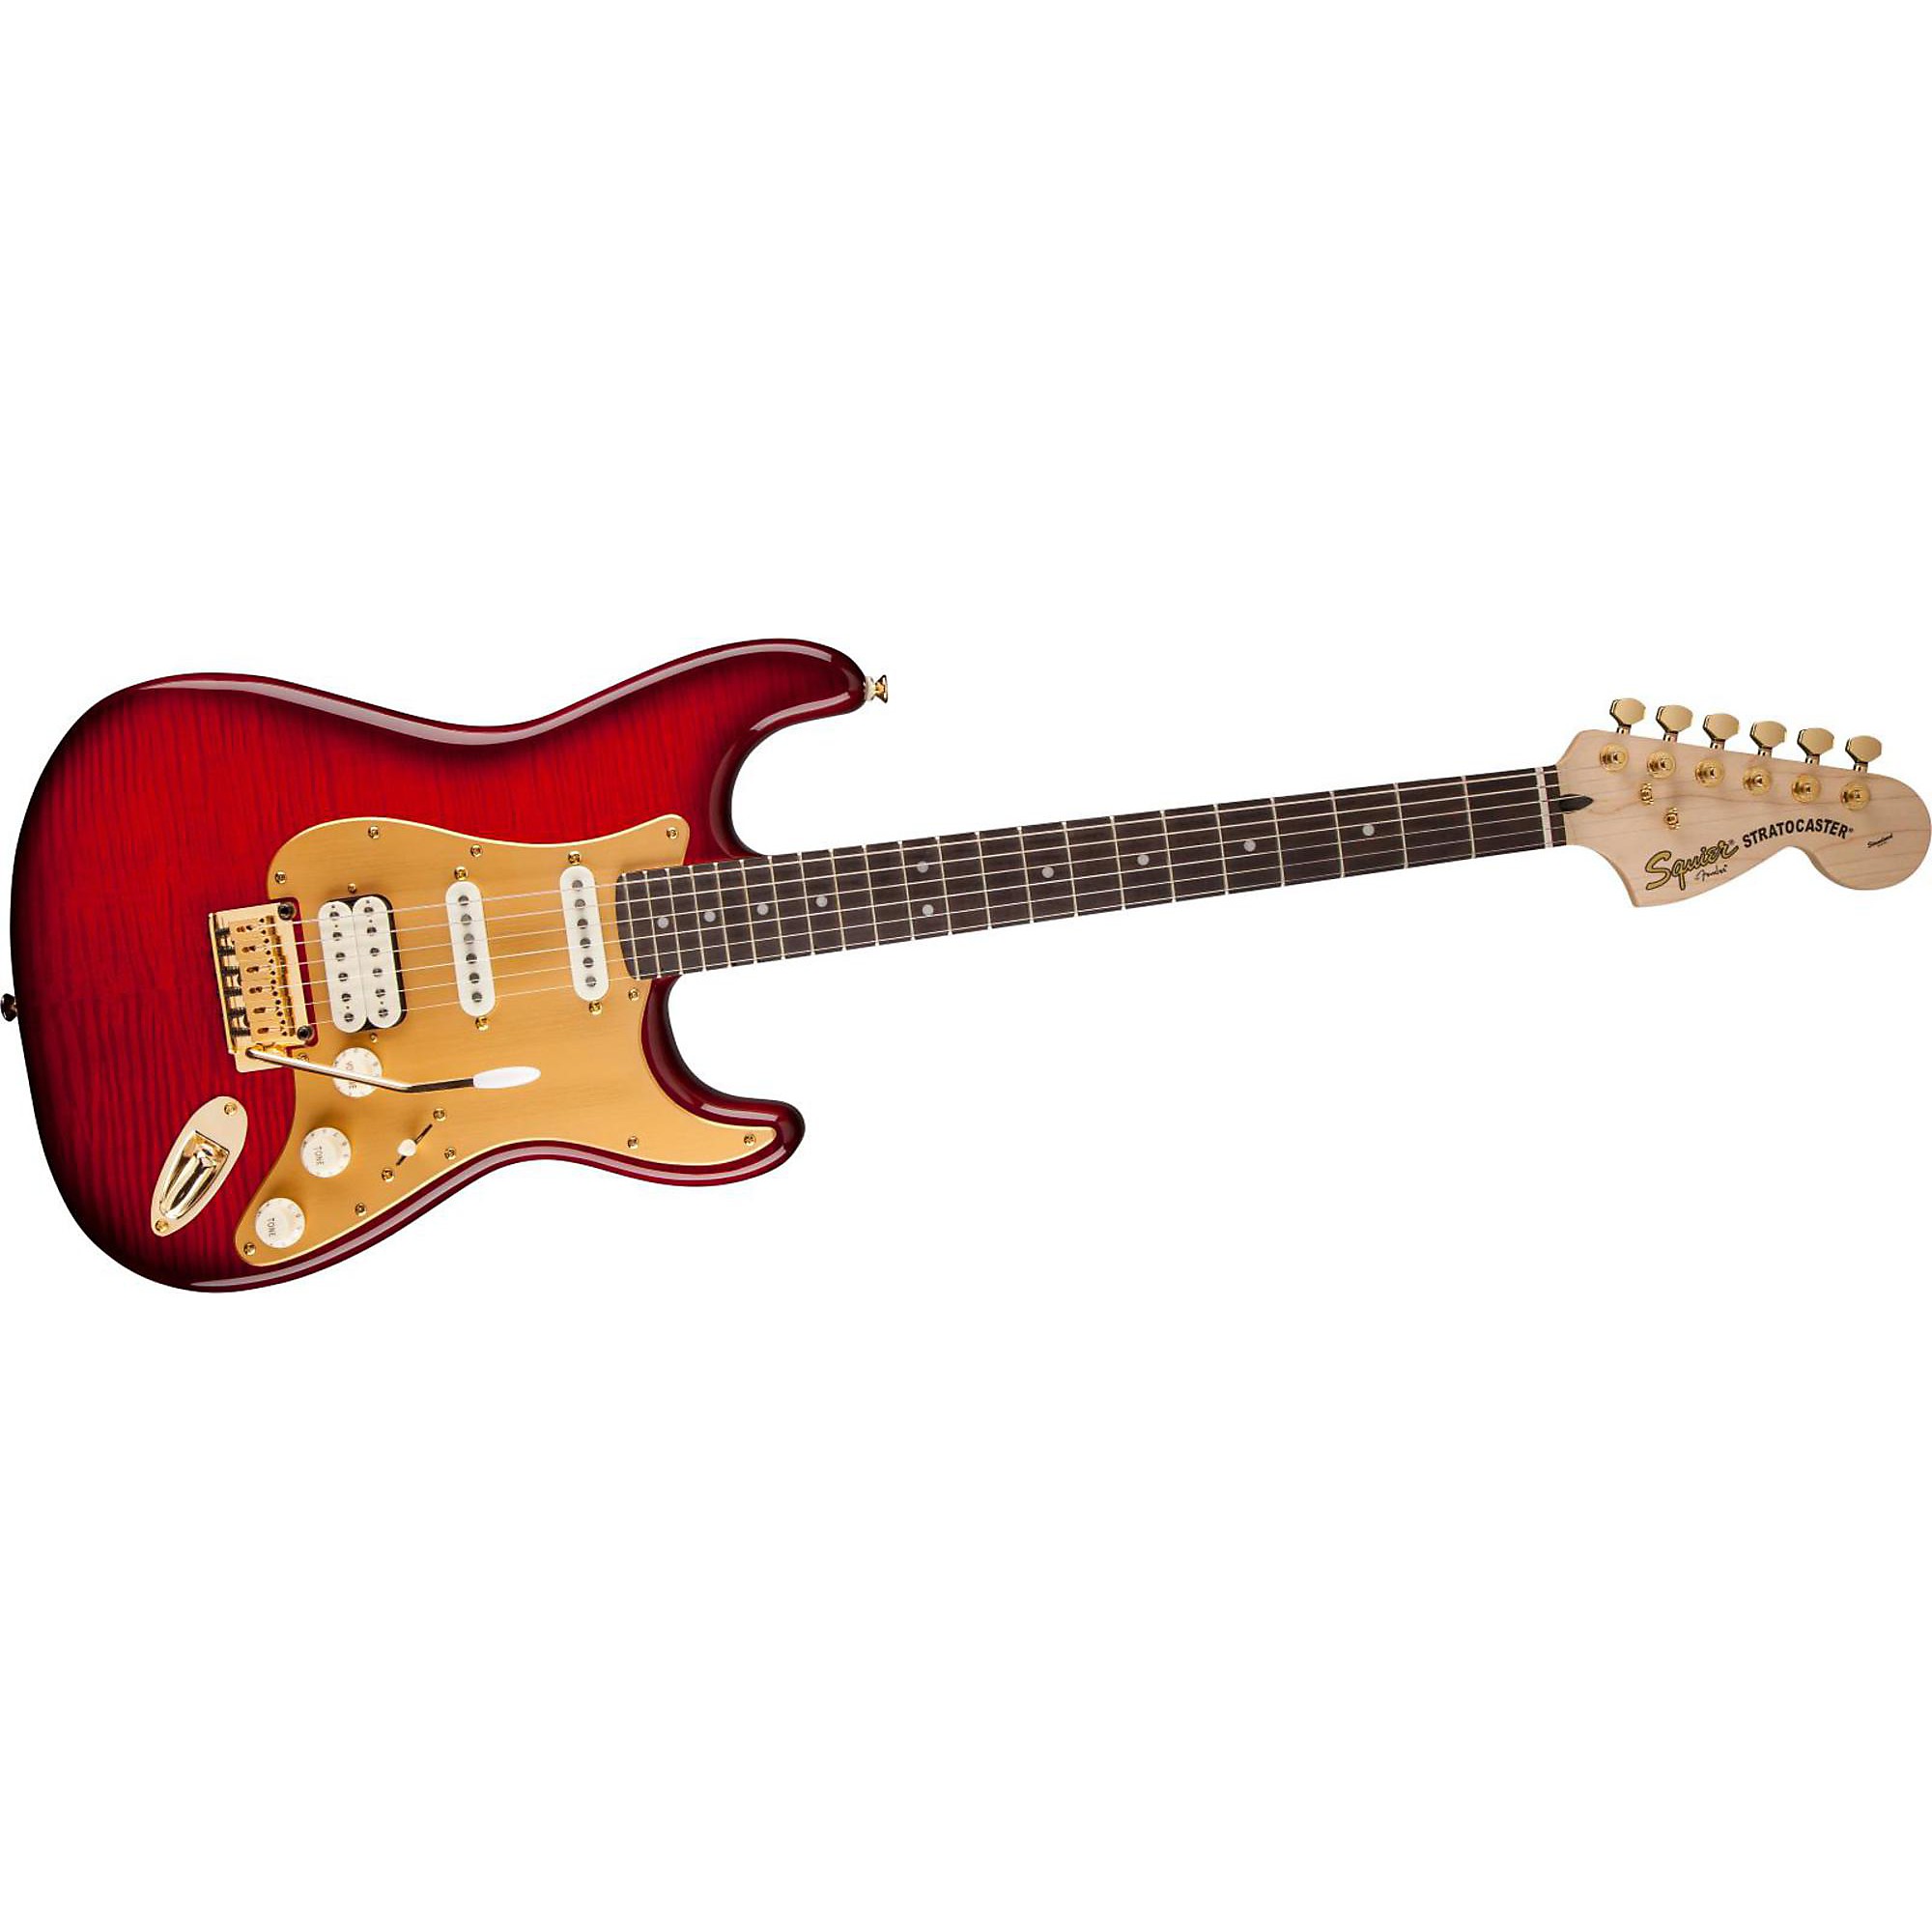 Squier Standard. Rockson HSS Electric Guitar Red. Squier Stratocaster Standard head. Новый бренд ред скваер.